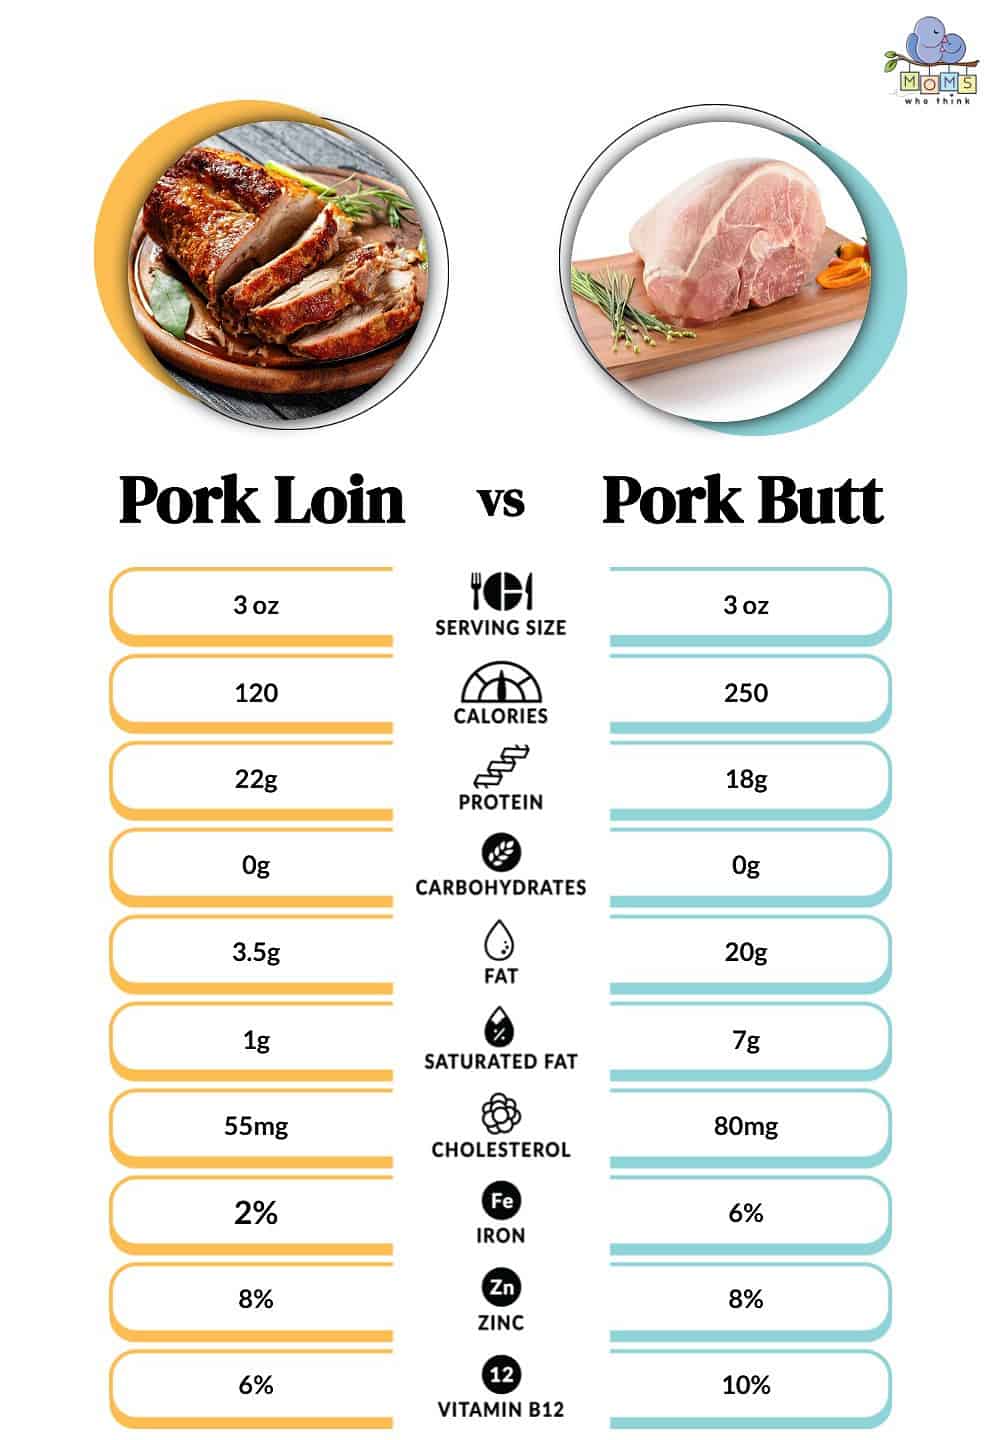 Pork Loin vs Pork Butt Nutritional Facts